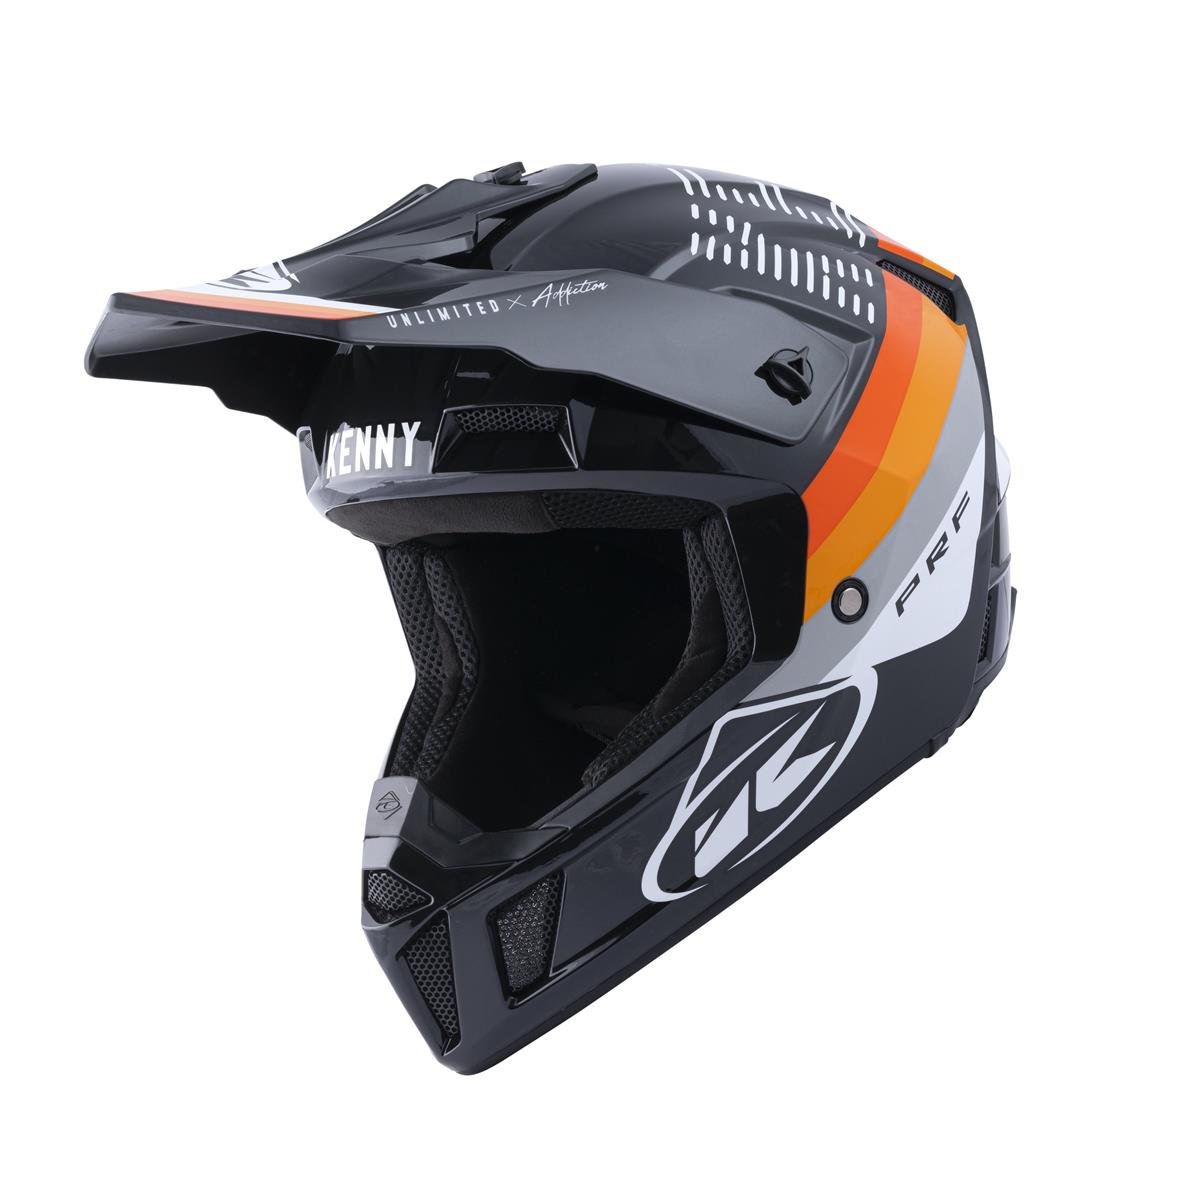 Kenny Motocross-Helm Performance Graphic - Schwarz